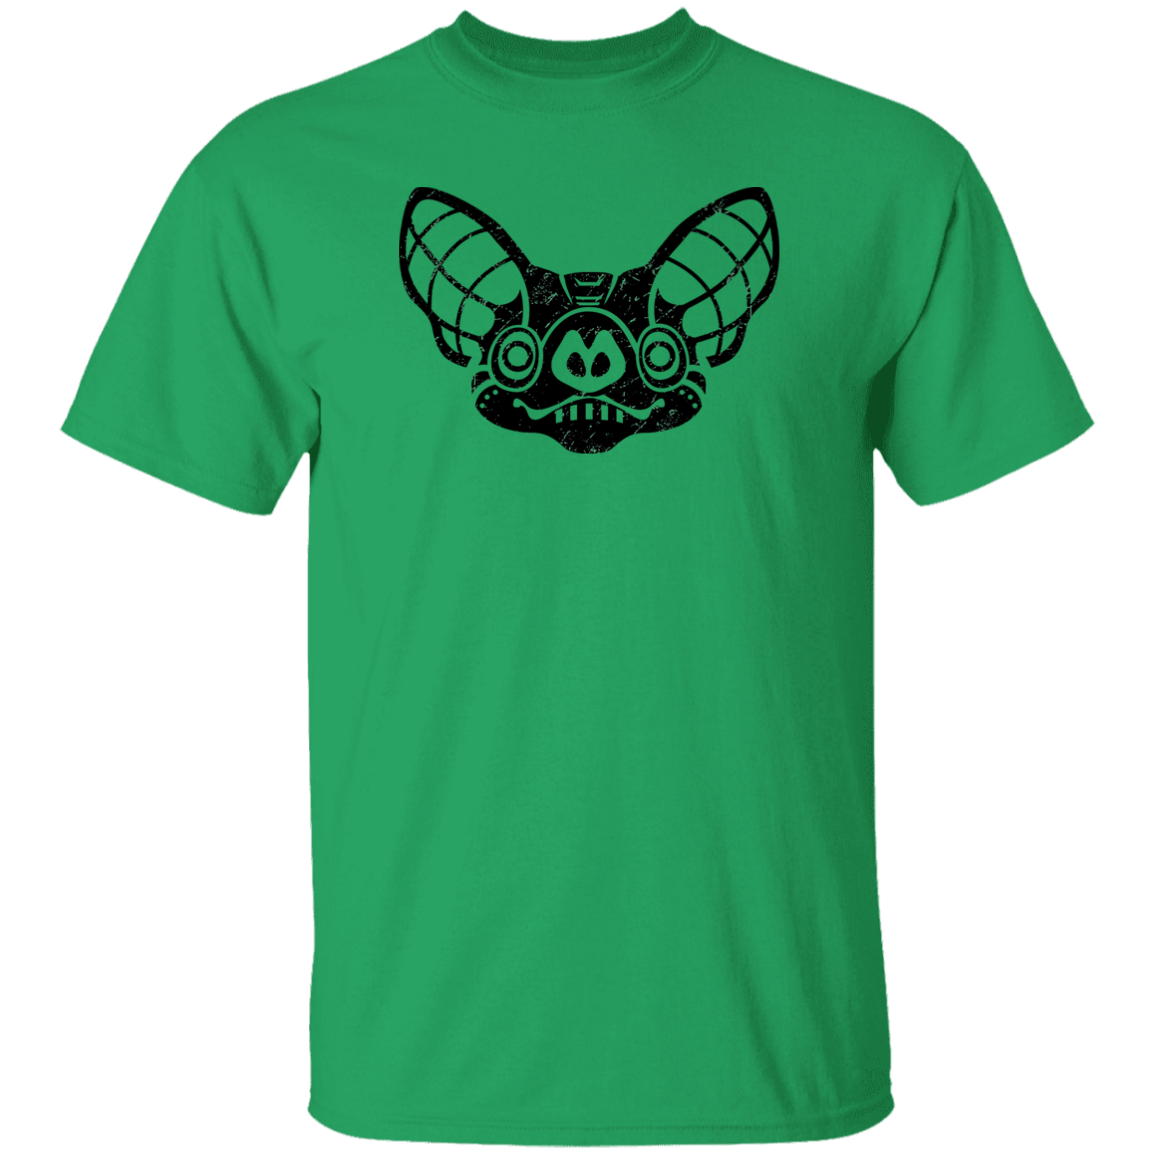 Black Distressed Emblem T-Shirt for Kids (Bat/Radar)